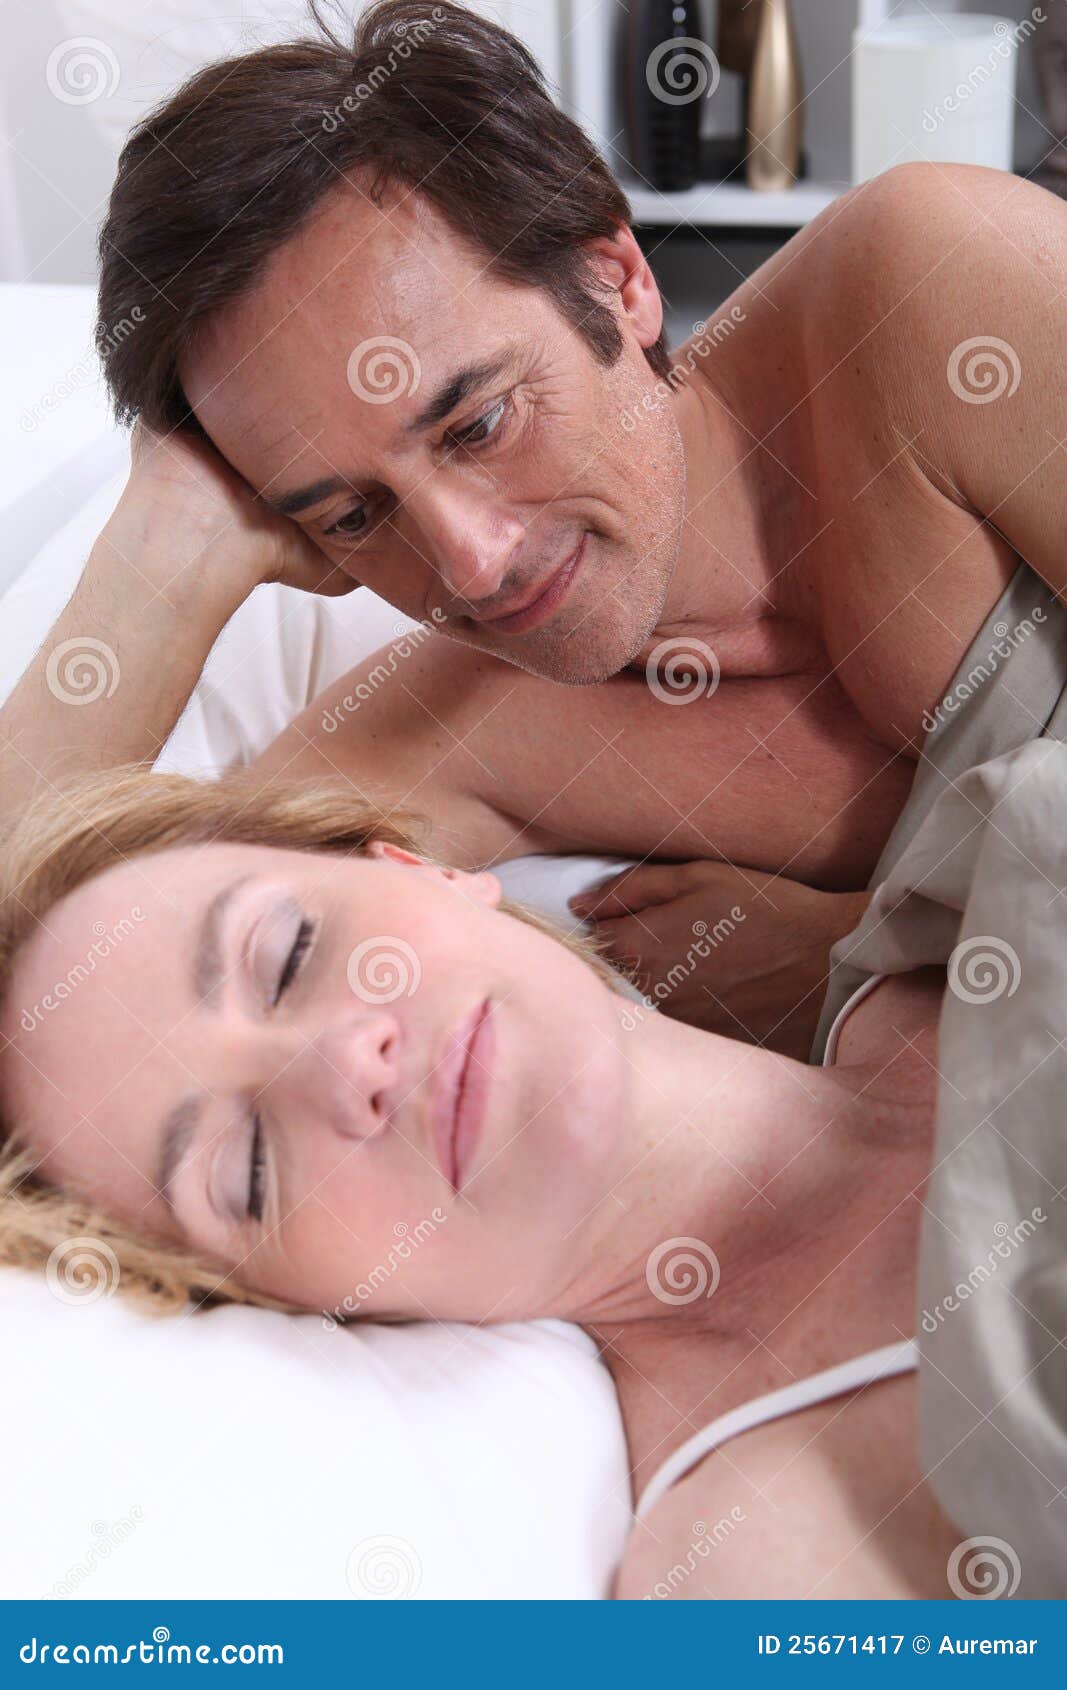 121 Man Watching Woman Sleeping Stock Photos